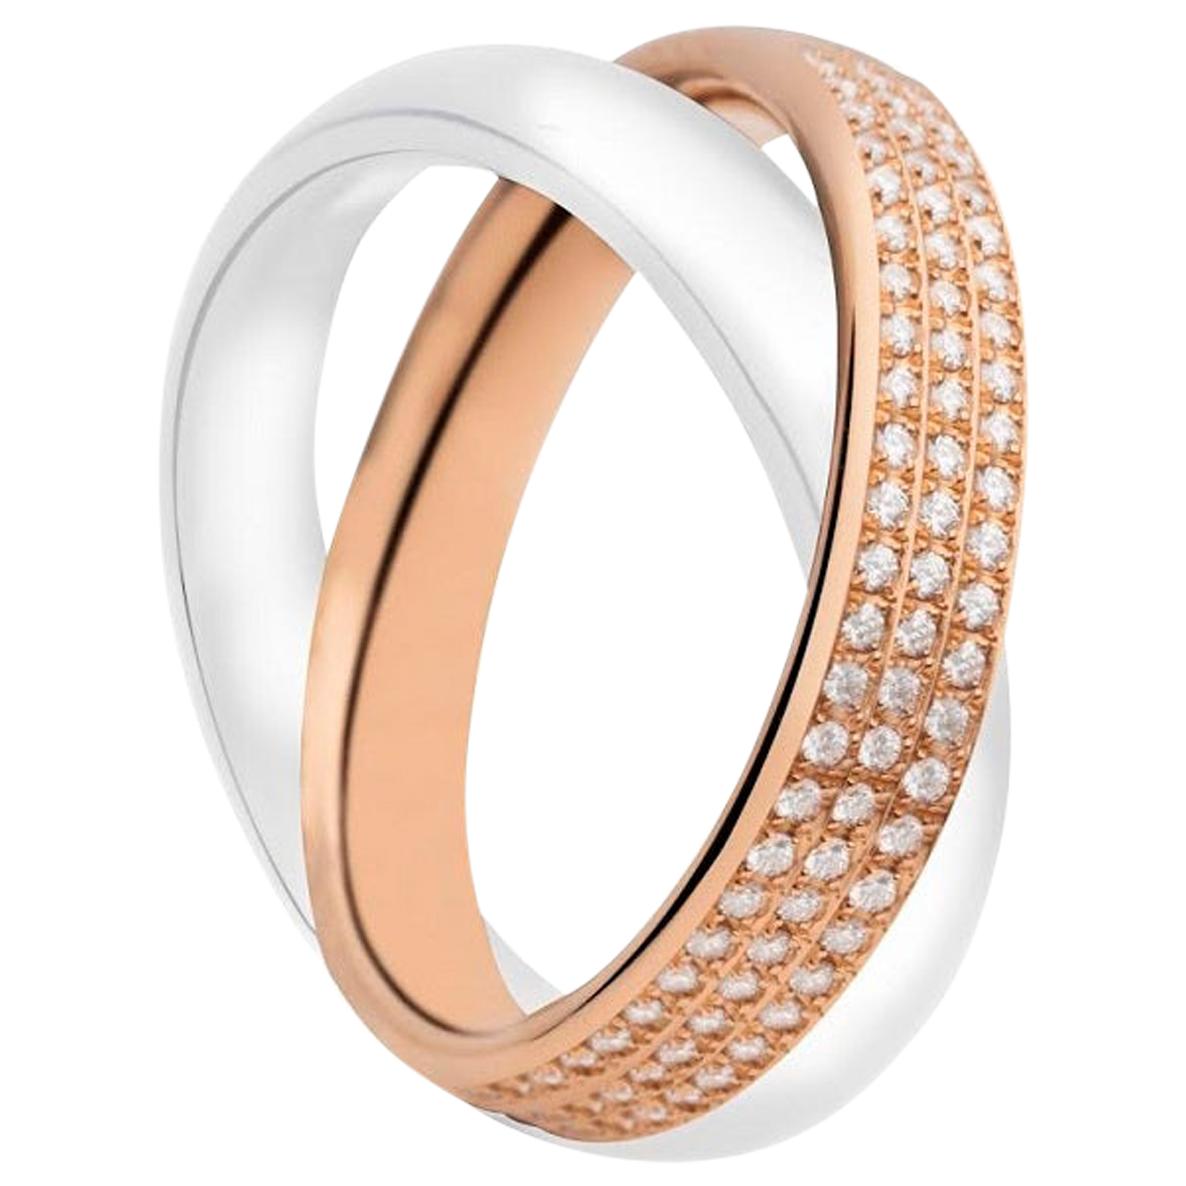 Matthia's & Claire Ensemble 18 Karat Rose Gold and Diamond "Double" Ring For Sale